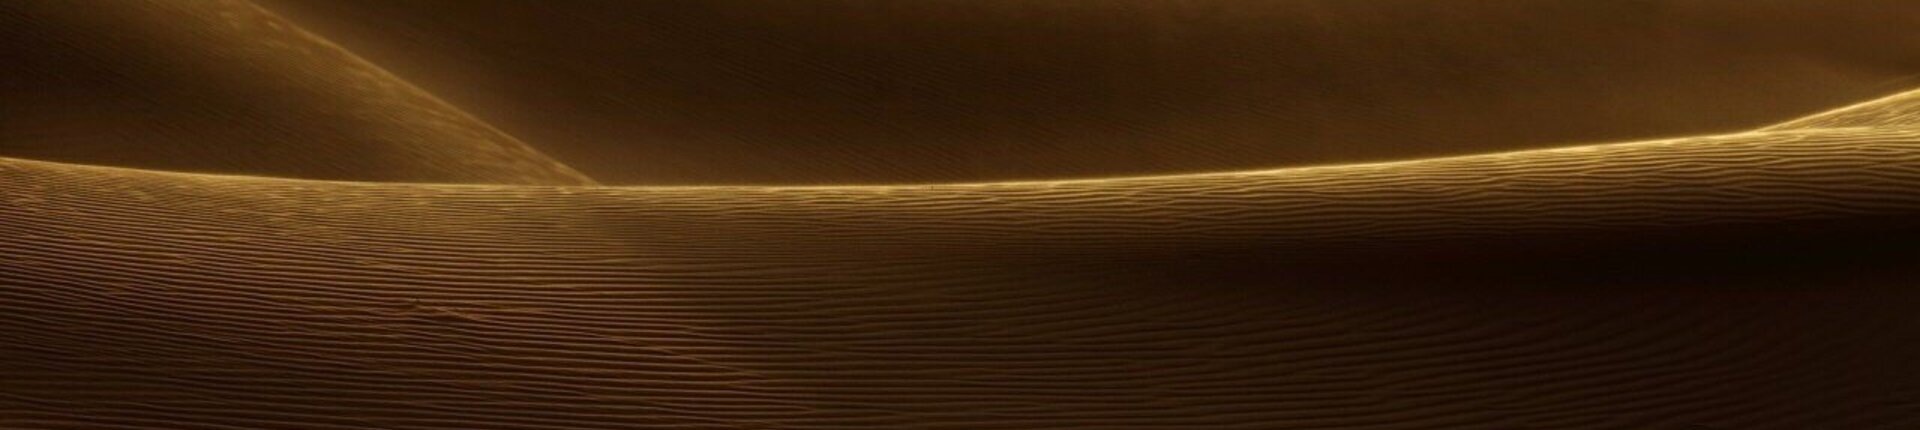 Düne in winterkalter Wüste (Photo: Oleg Kugaev)